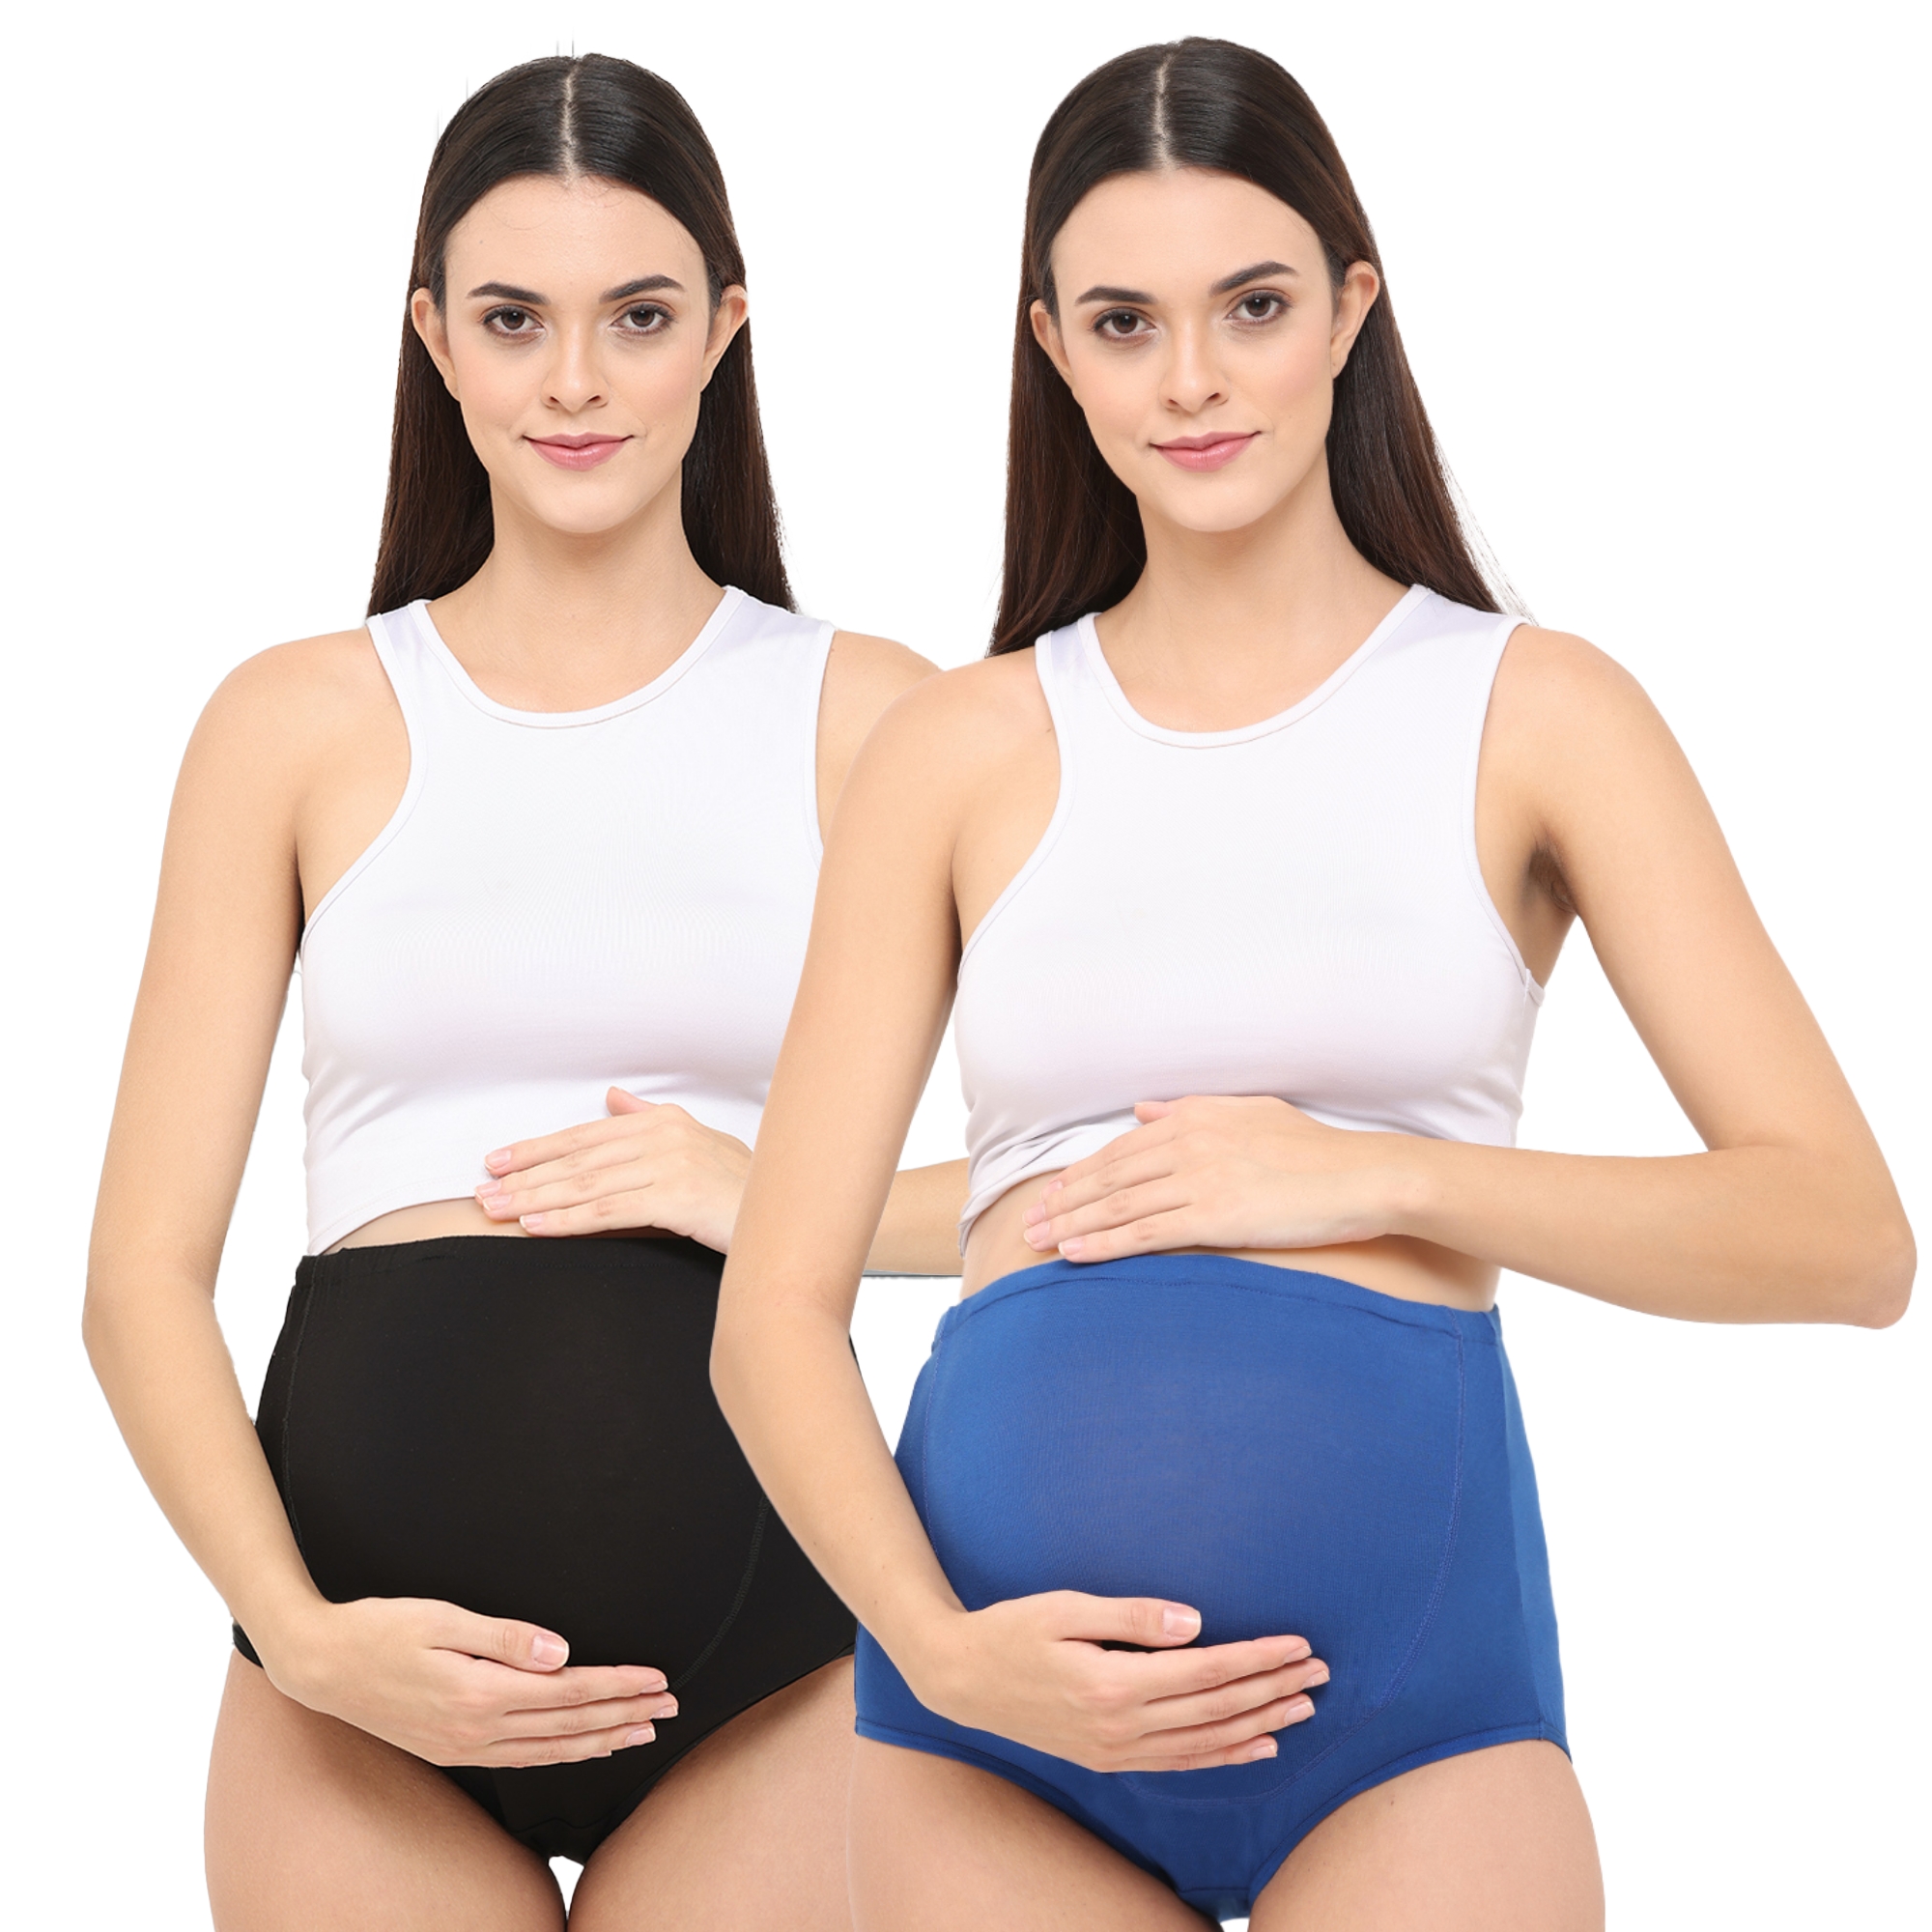 Women's Maternity Panties Underwear Cotton High Waist Belly Support